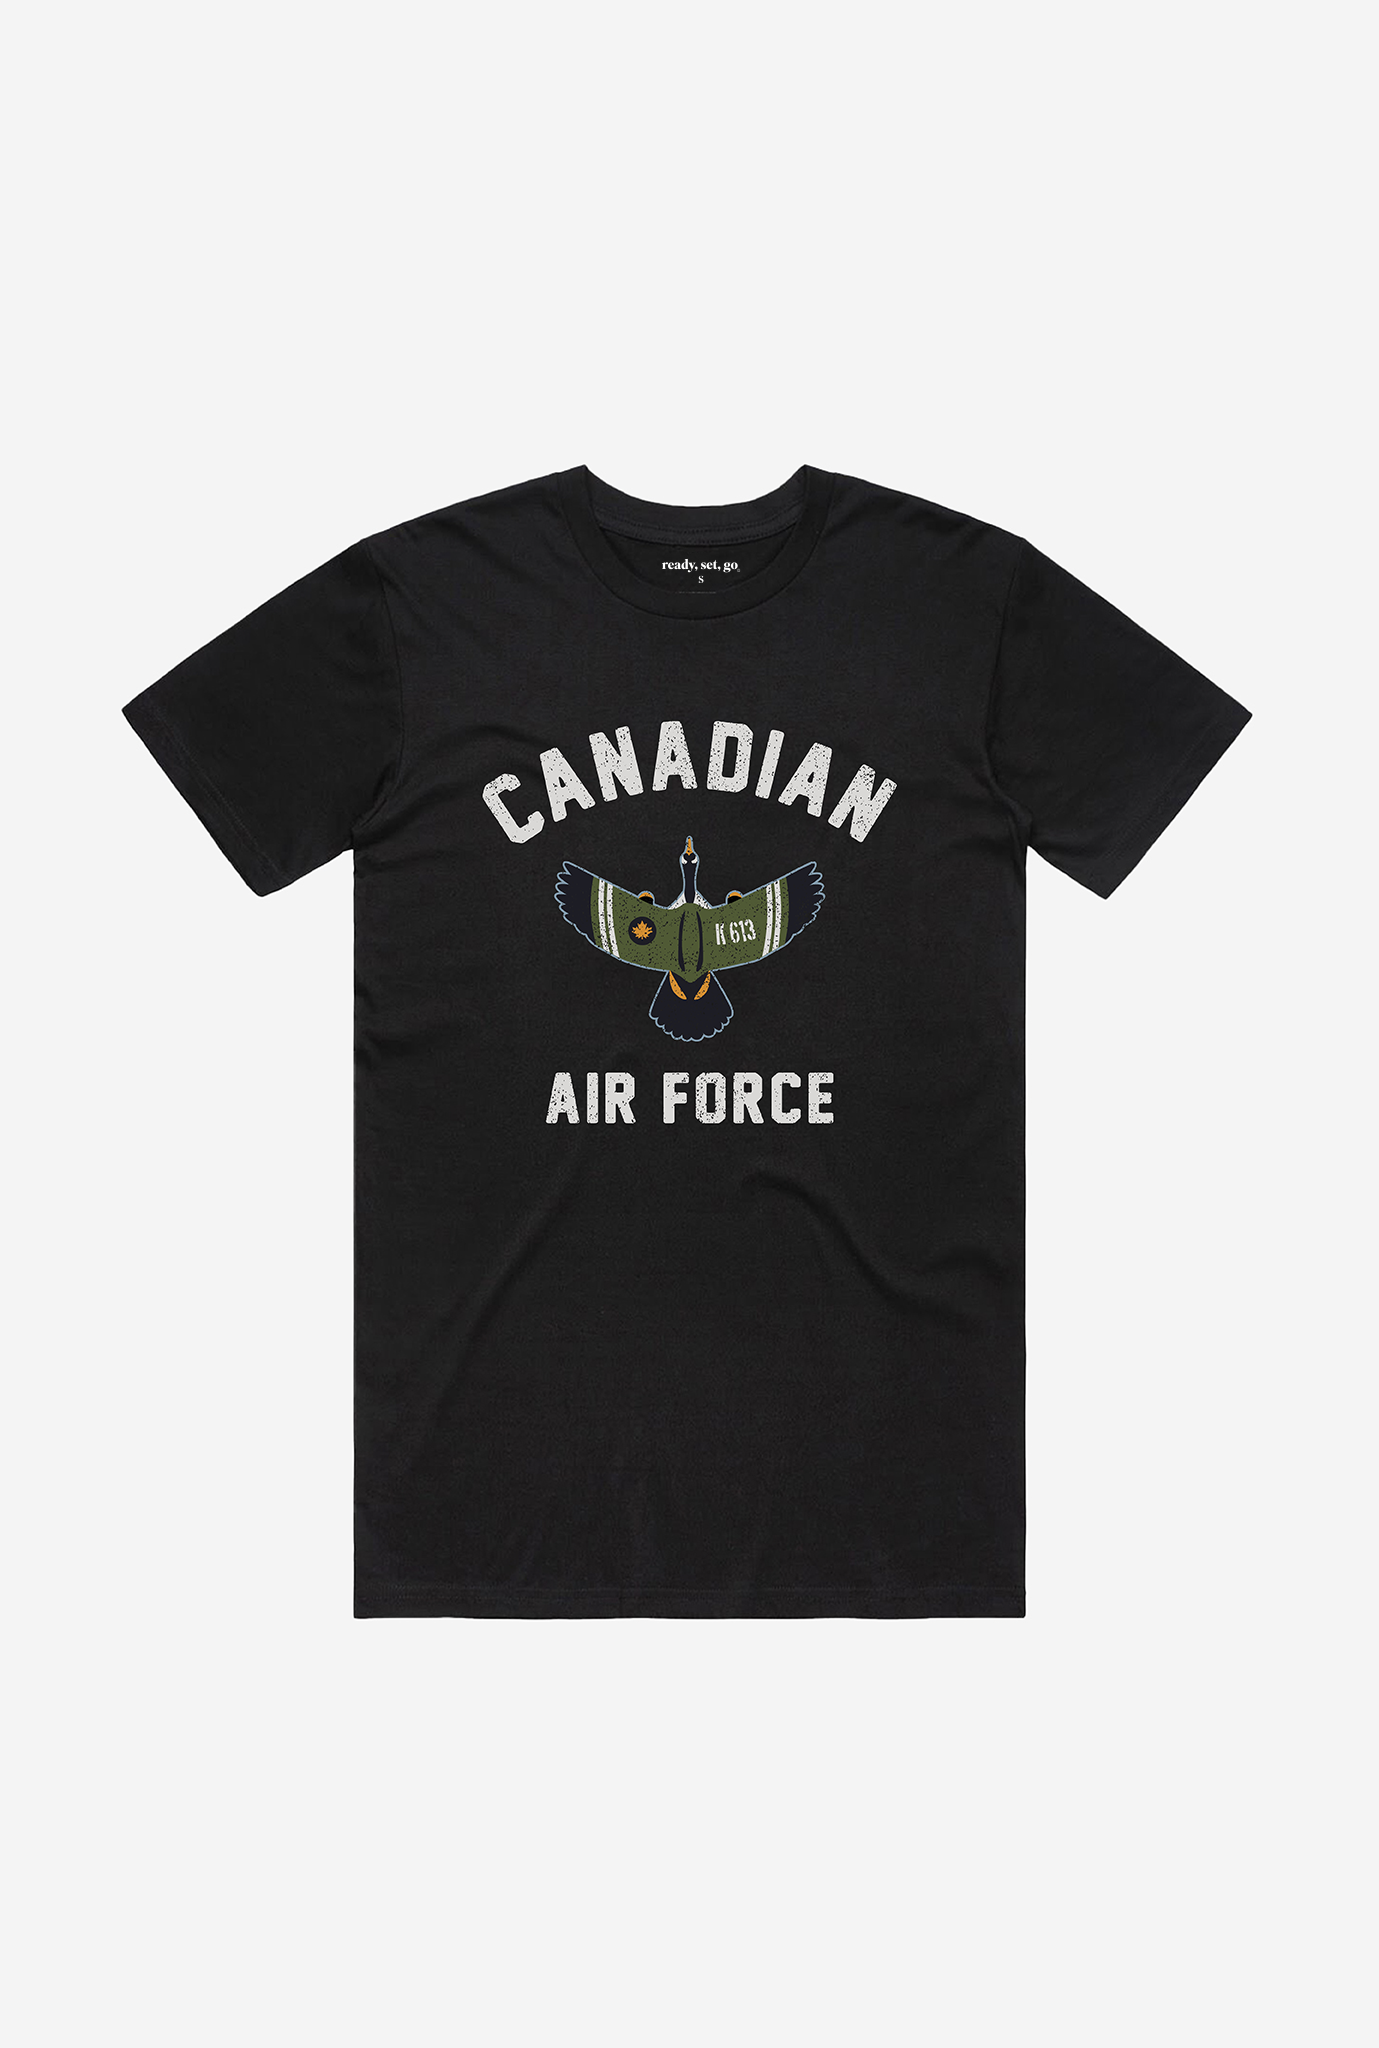 Canadian Air Force T-Shirt - Black